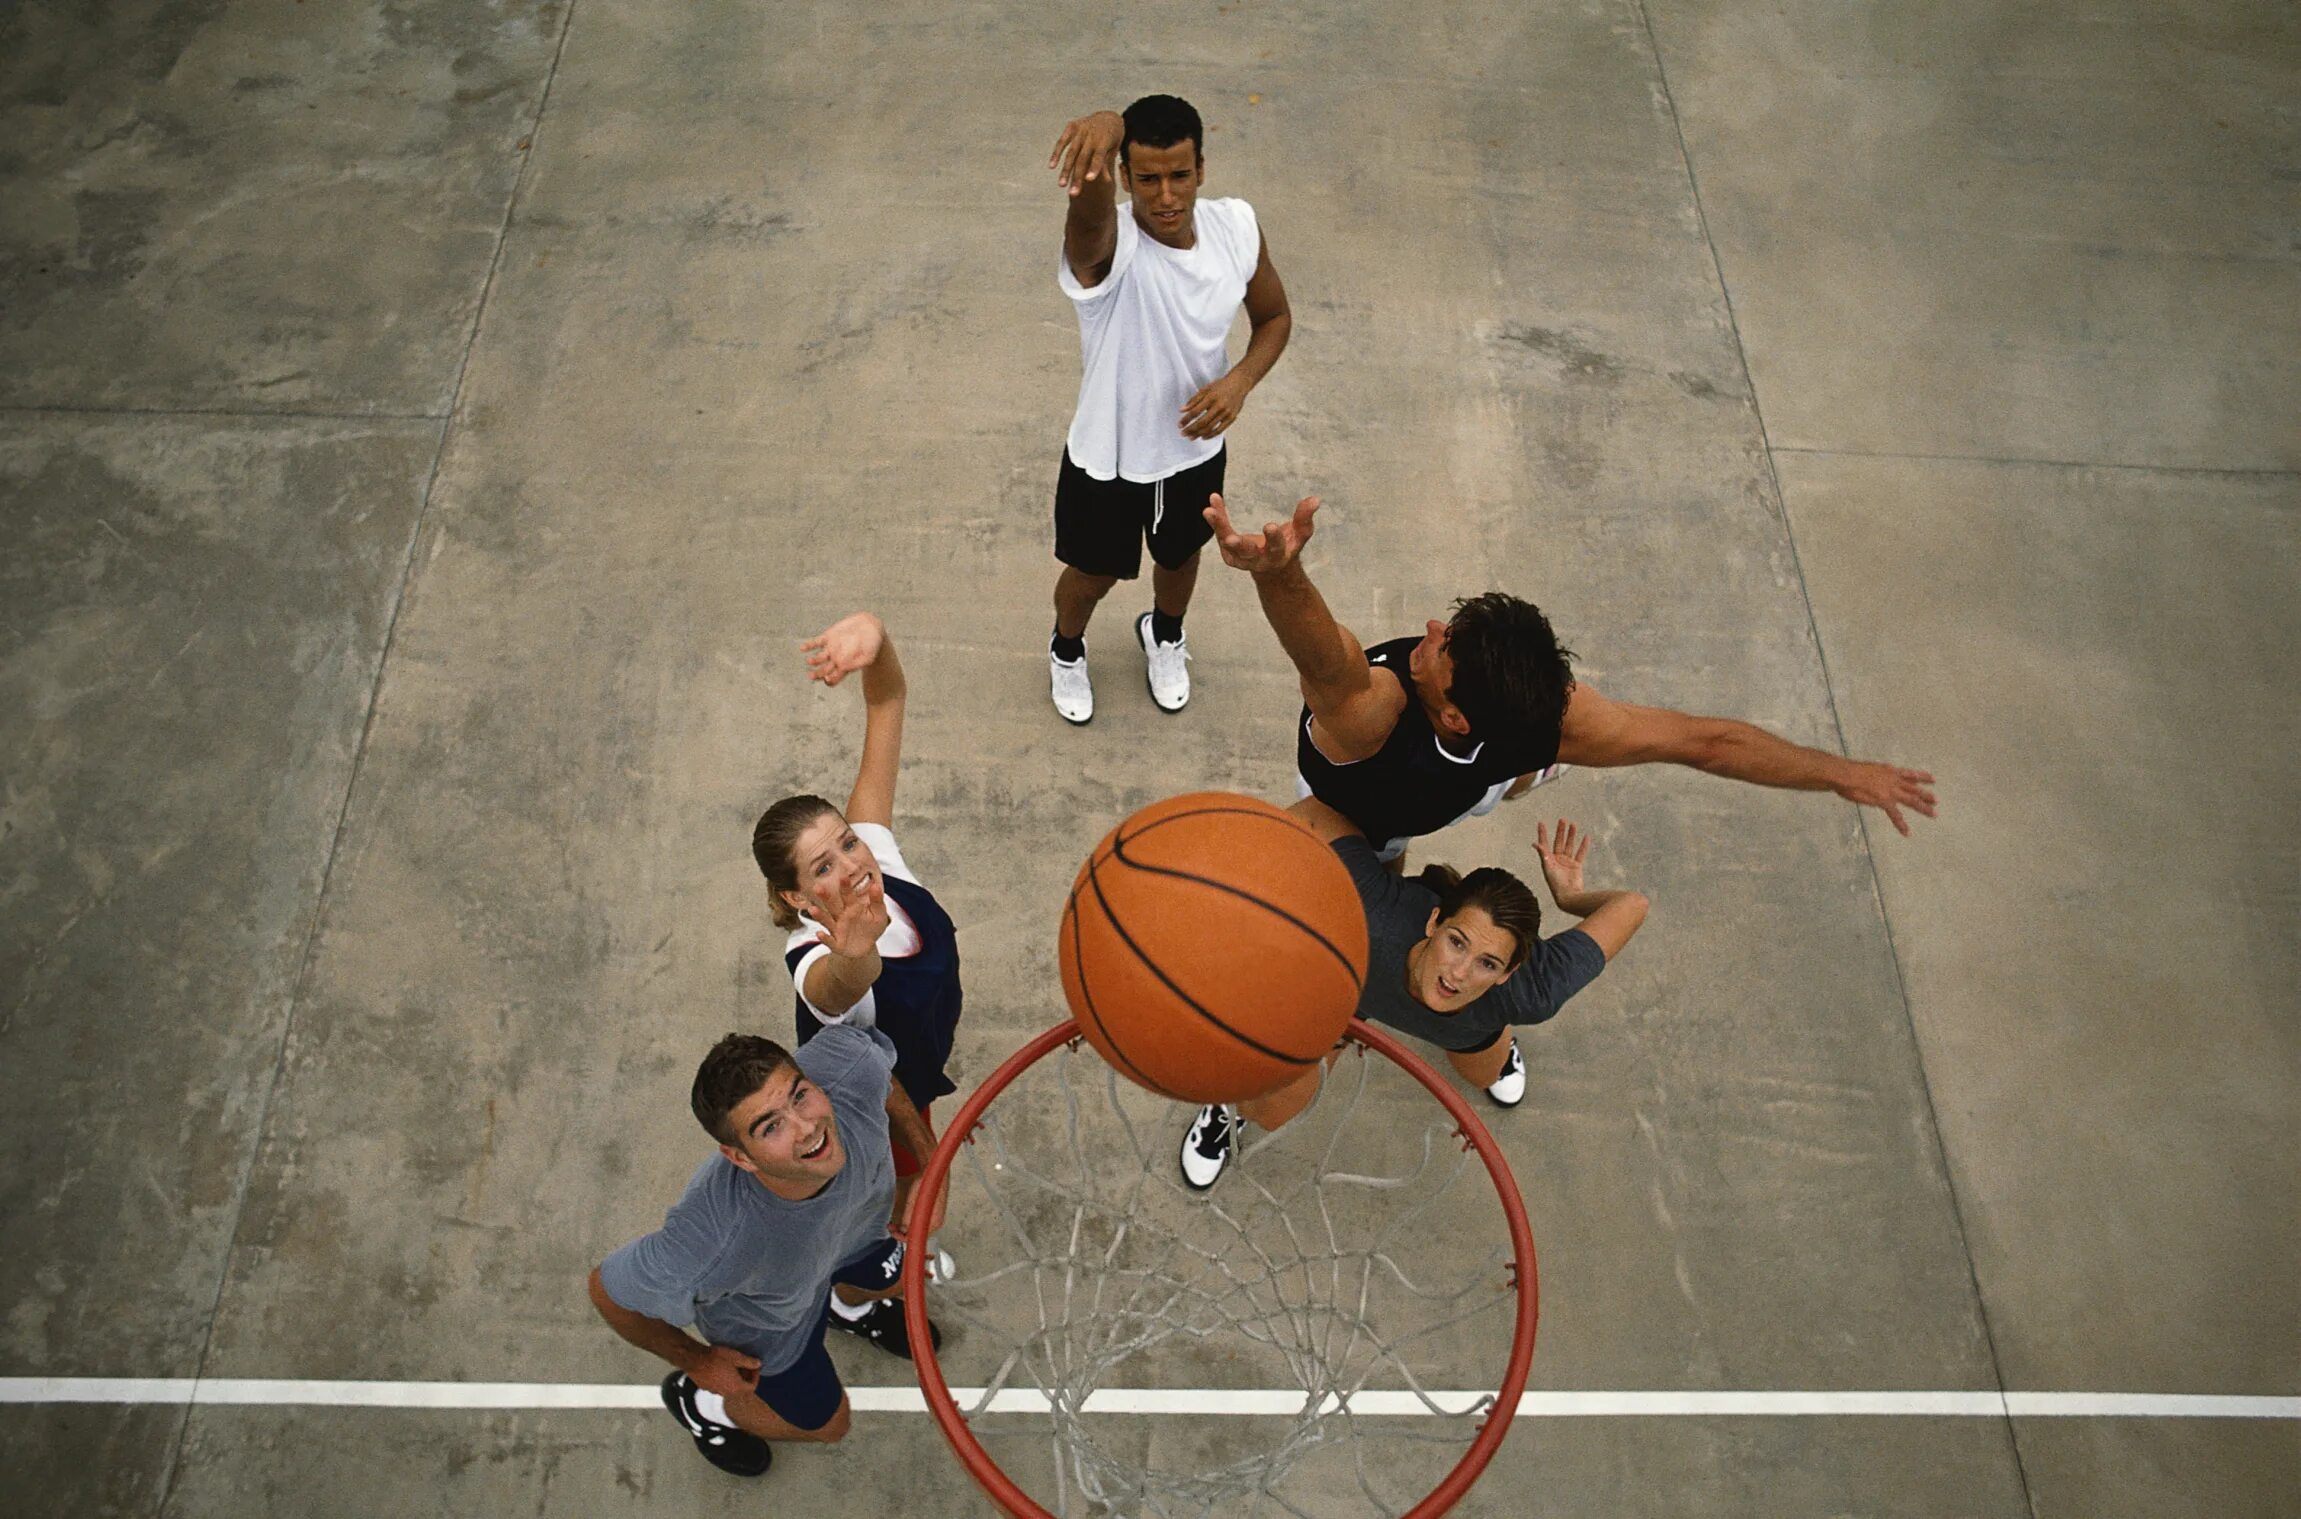 Sport can play with. Баскетбол дети. Спортивные увлечения. Спортивные игры. Дети играющие в баскетбол.